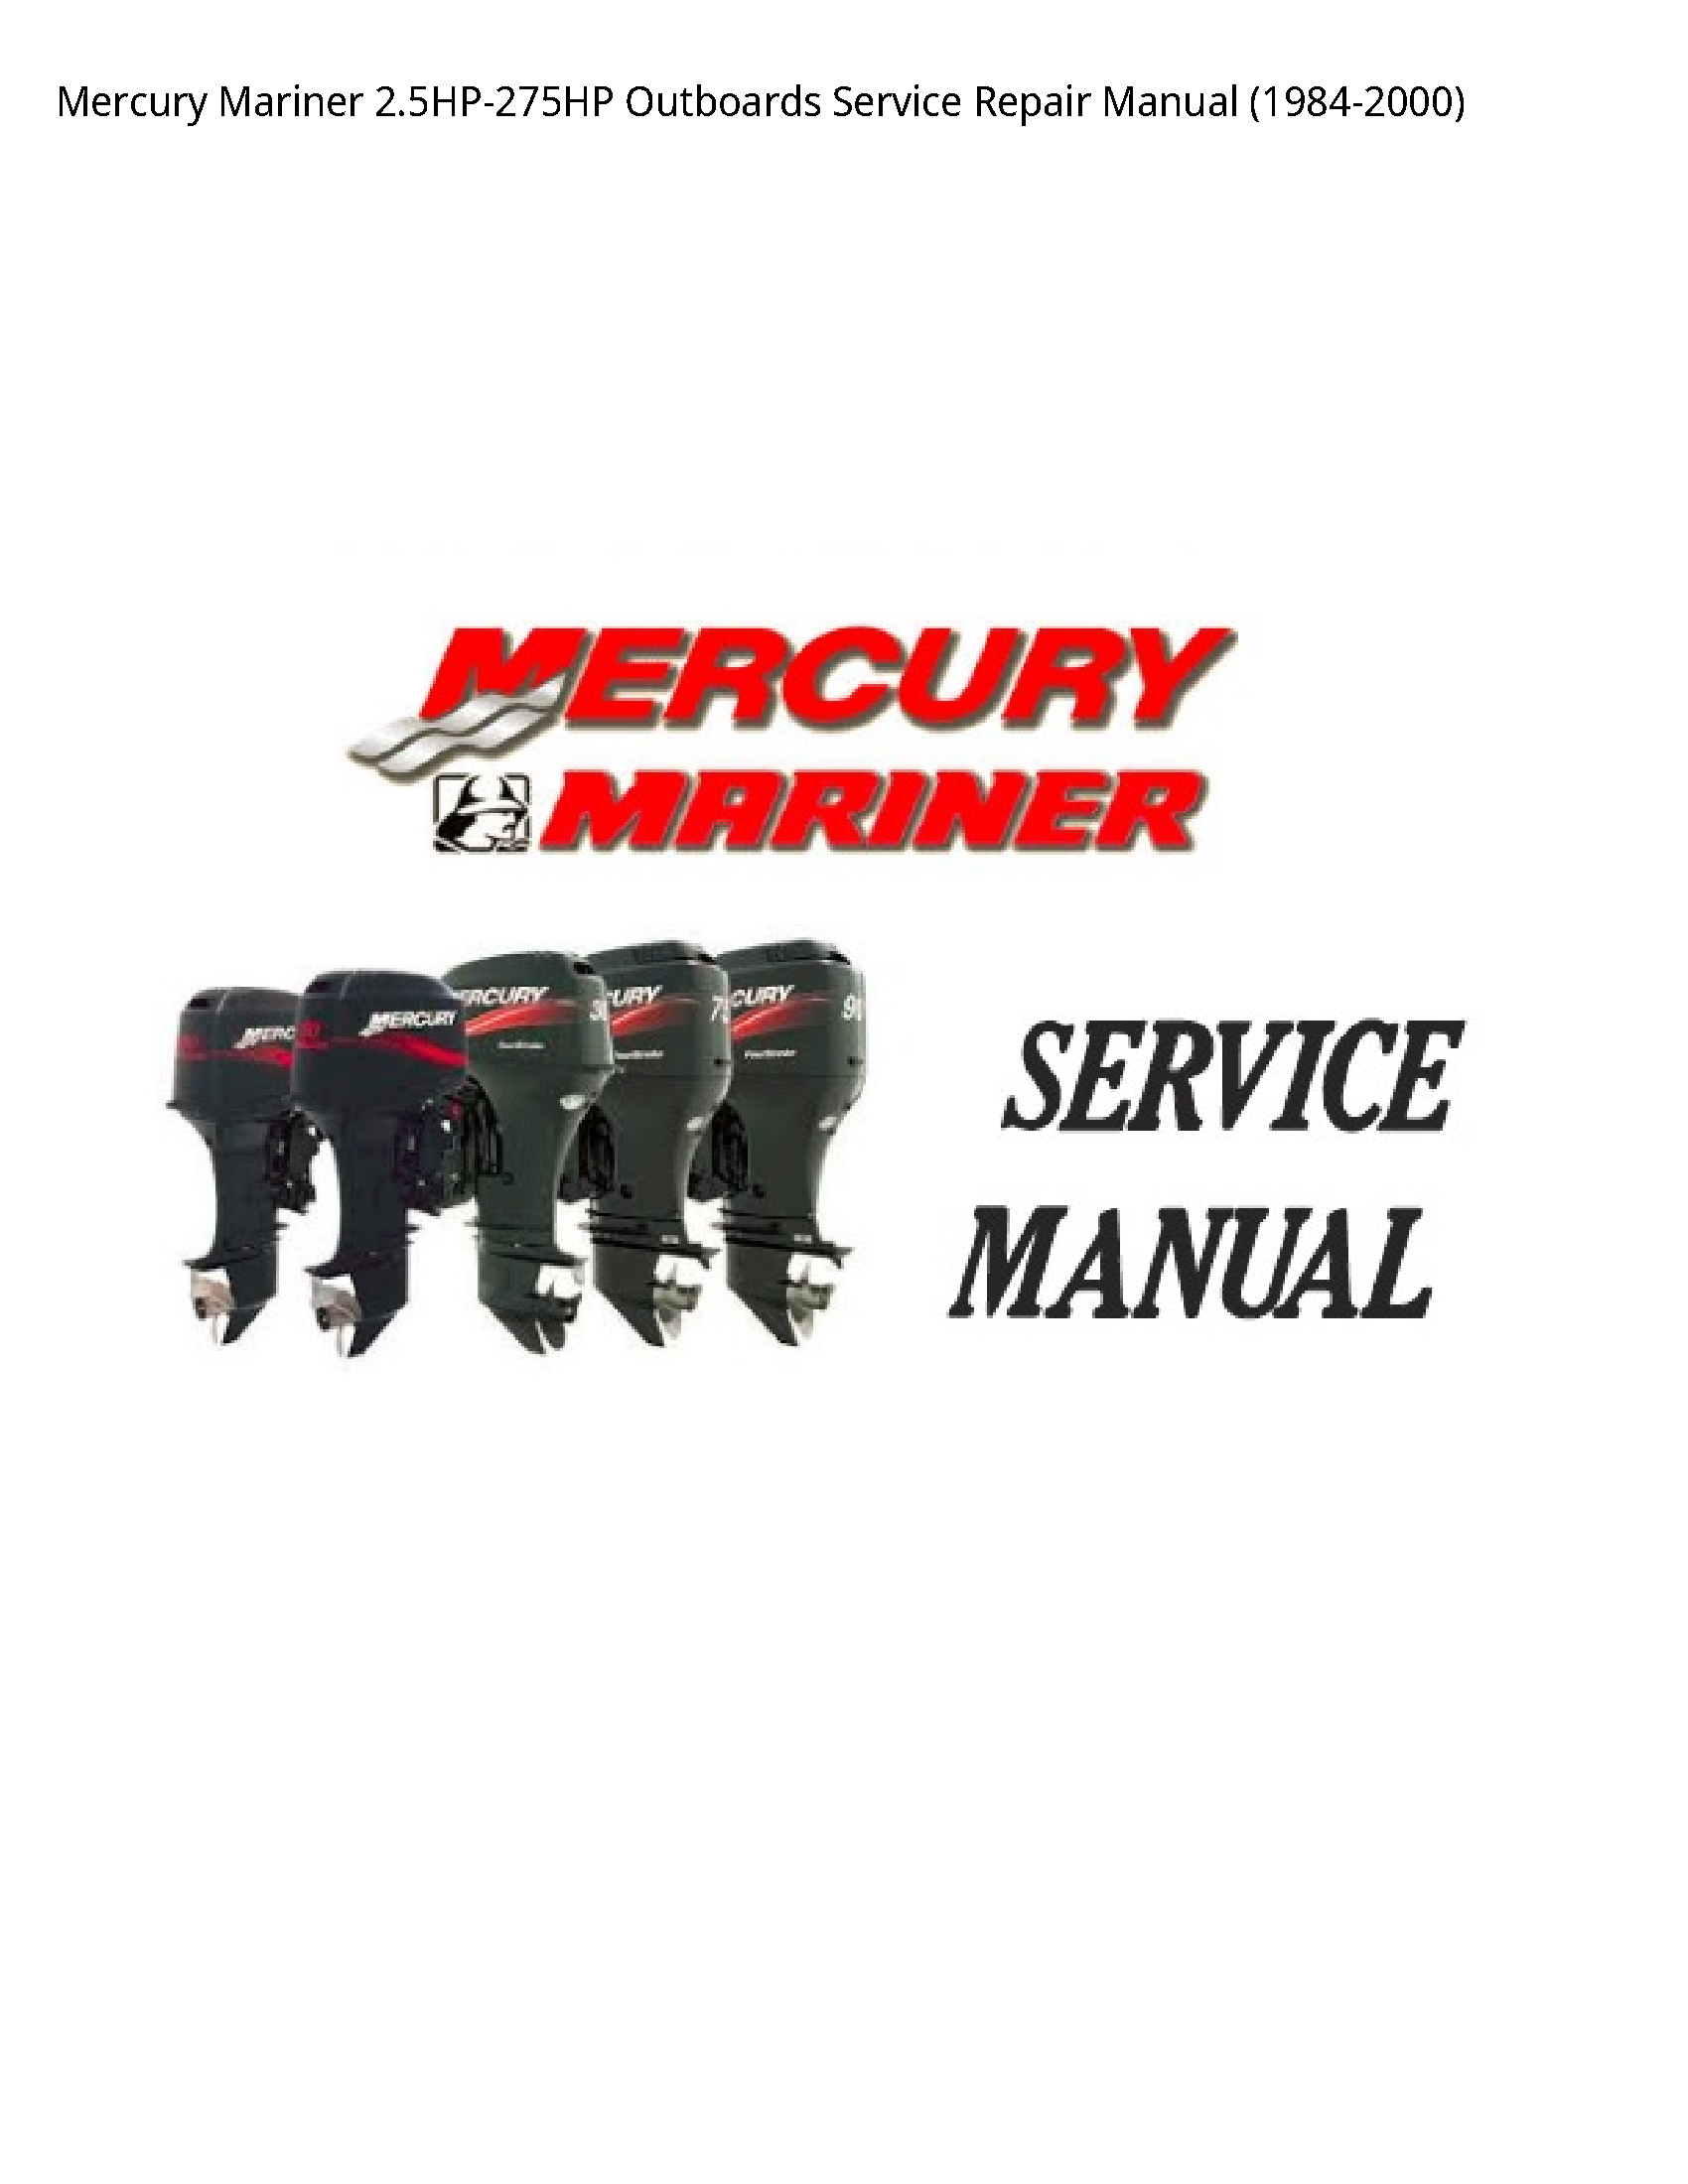 Mercury Mariner 2.5HP-275HP Outboards manual